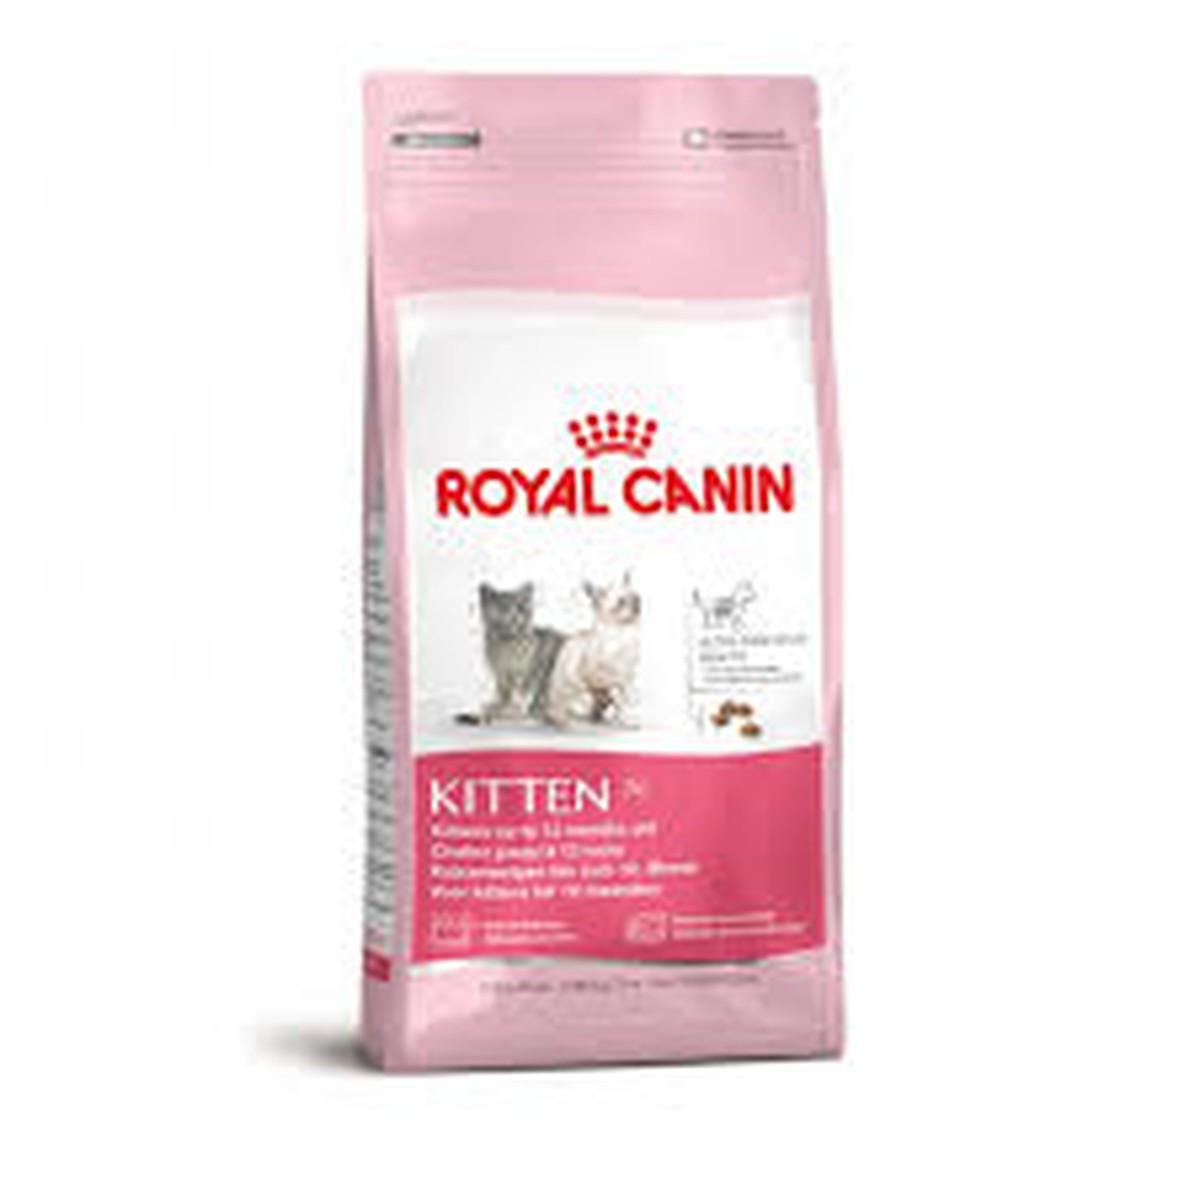 Royal Canin  Kitten 400 g  400 g